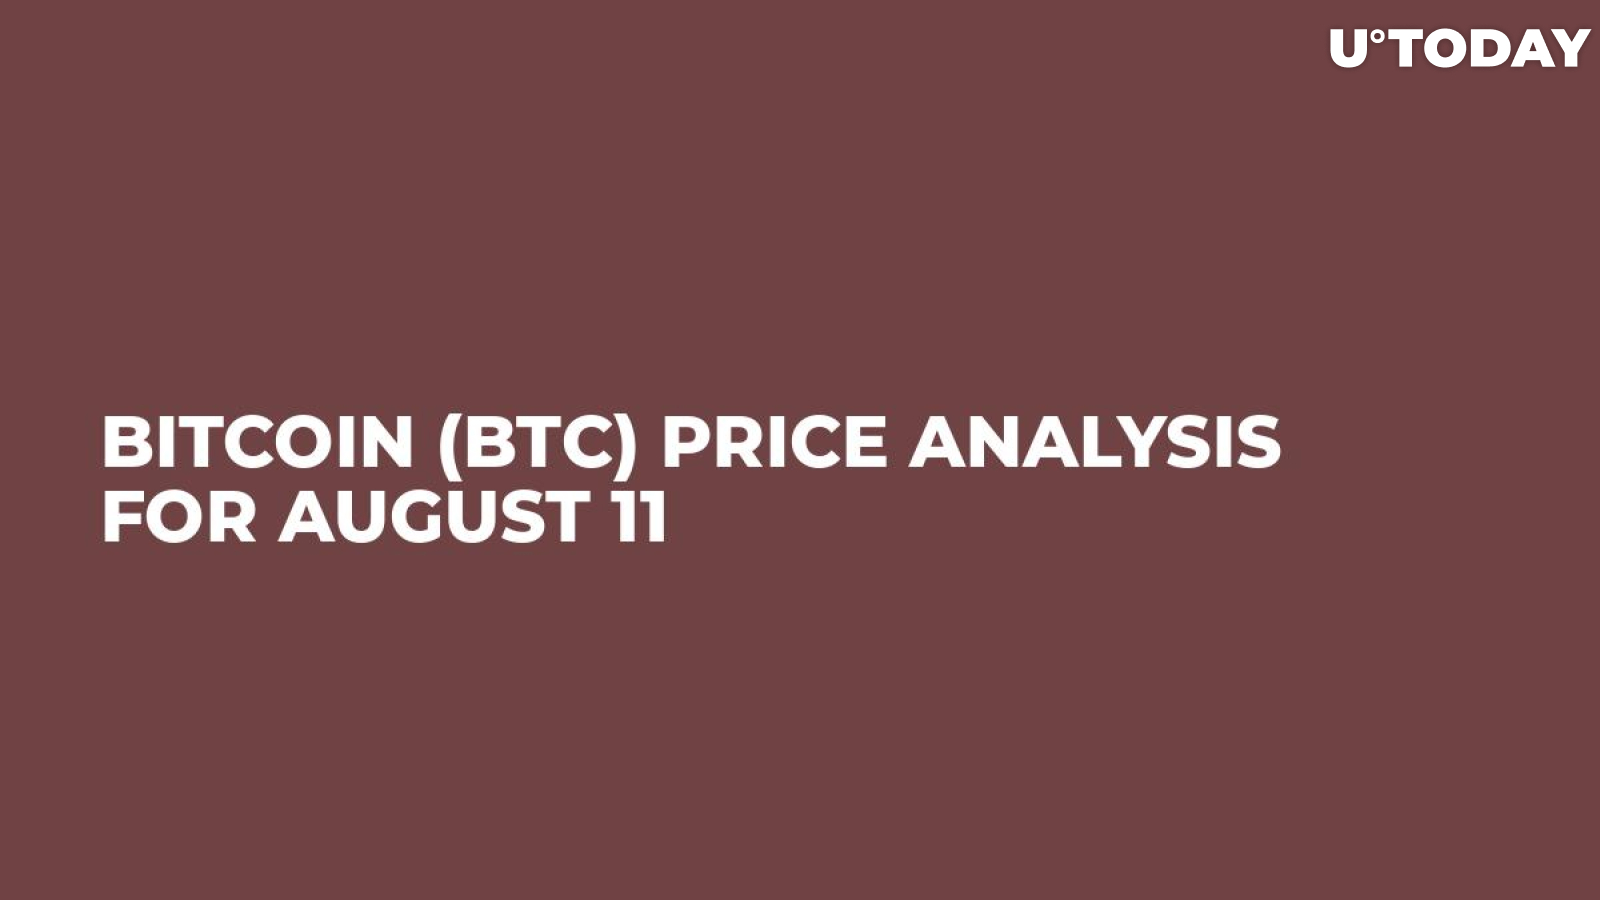 Bitcoin (BTC) Price Analysis for August 11